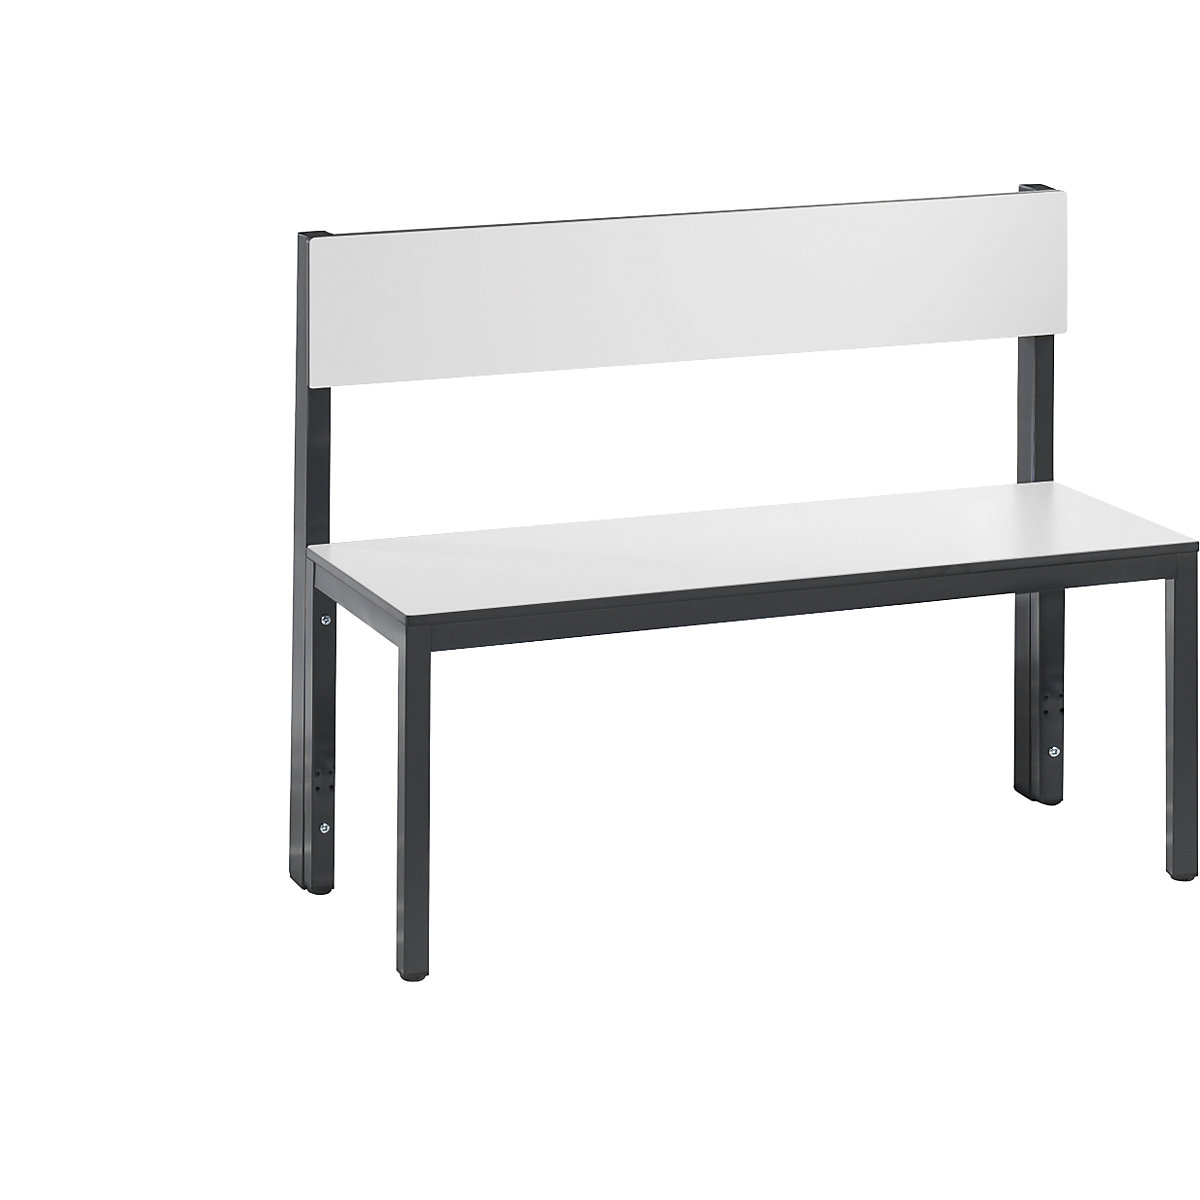 BASIC PLUS cloakroom bench, single sided - C+P